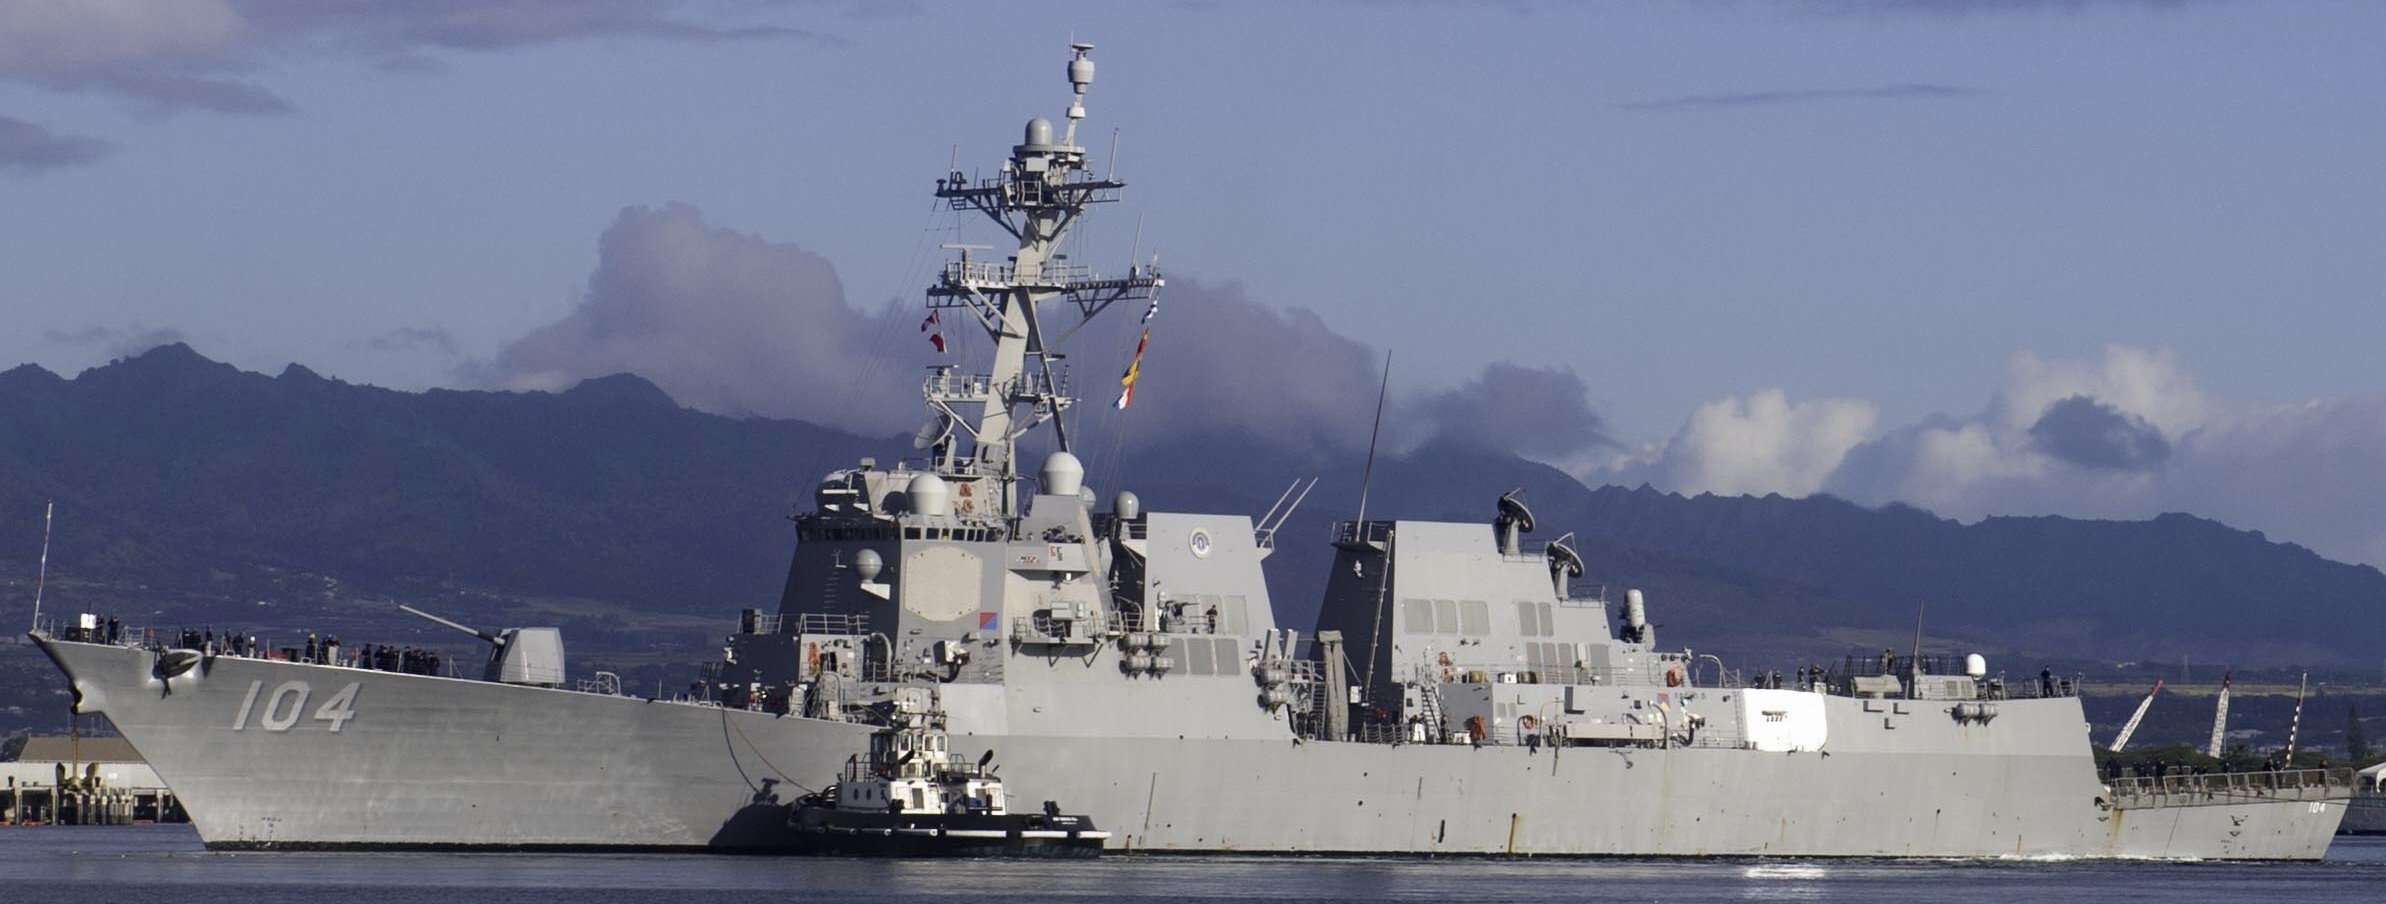 ddg-104 uss sterett arleigh burke class guided missile destroyer aegis us navy pearl harbor hickam hawaii 12